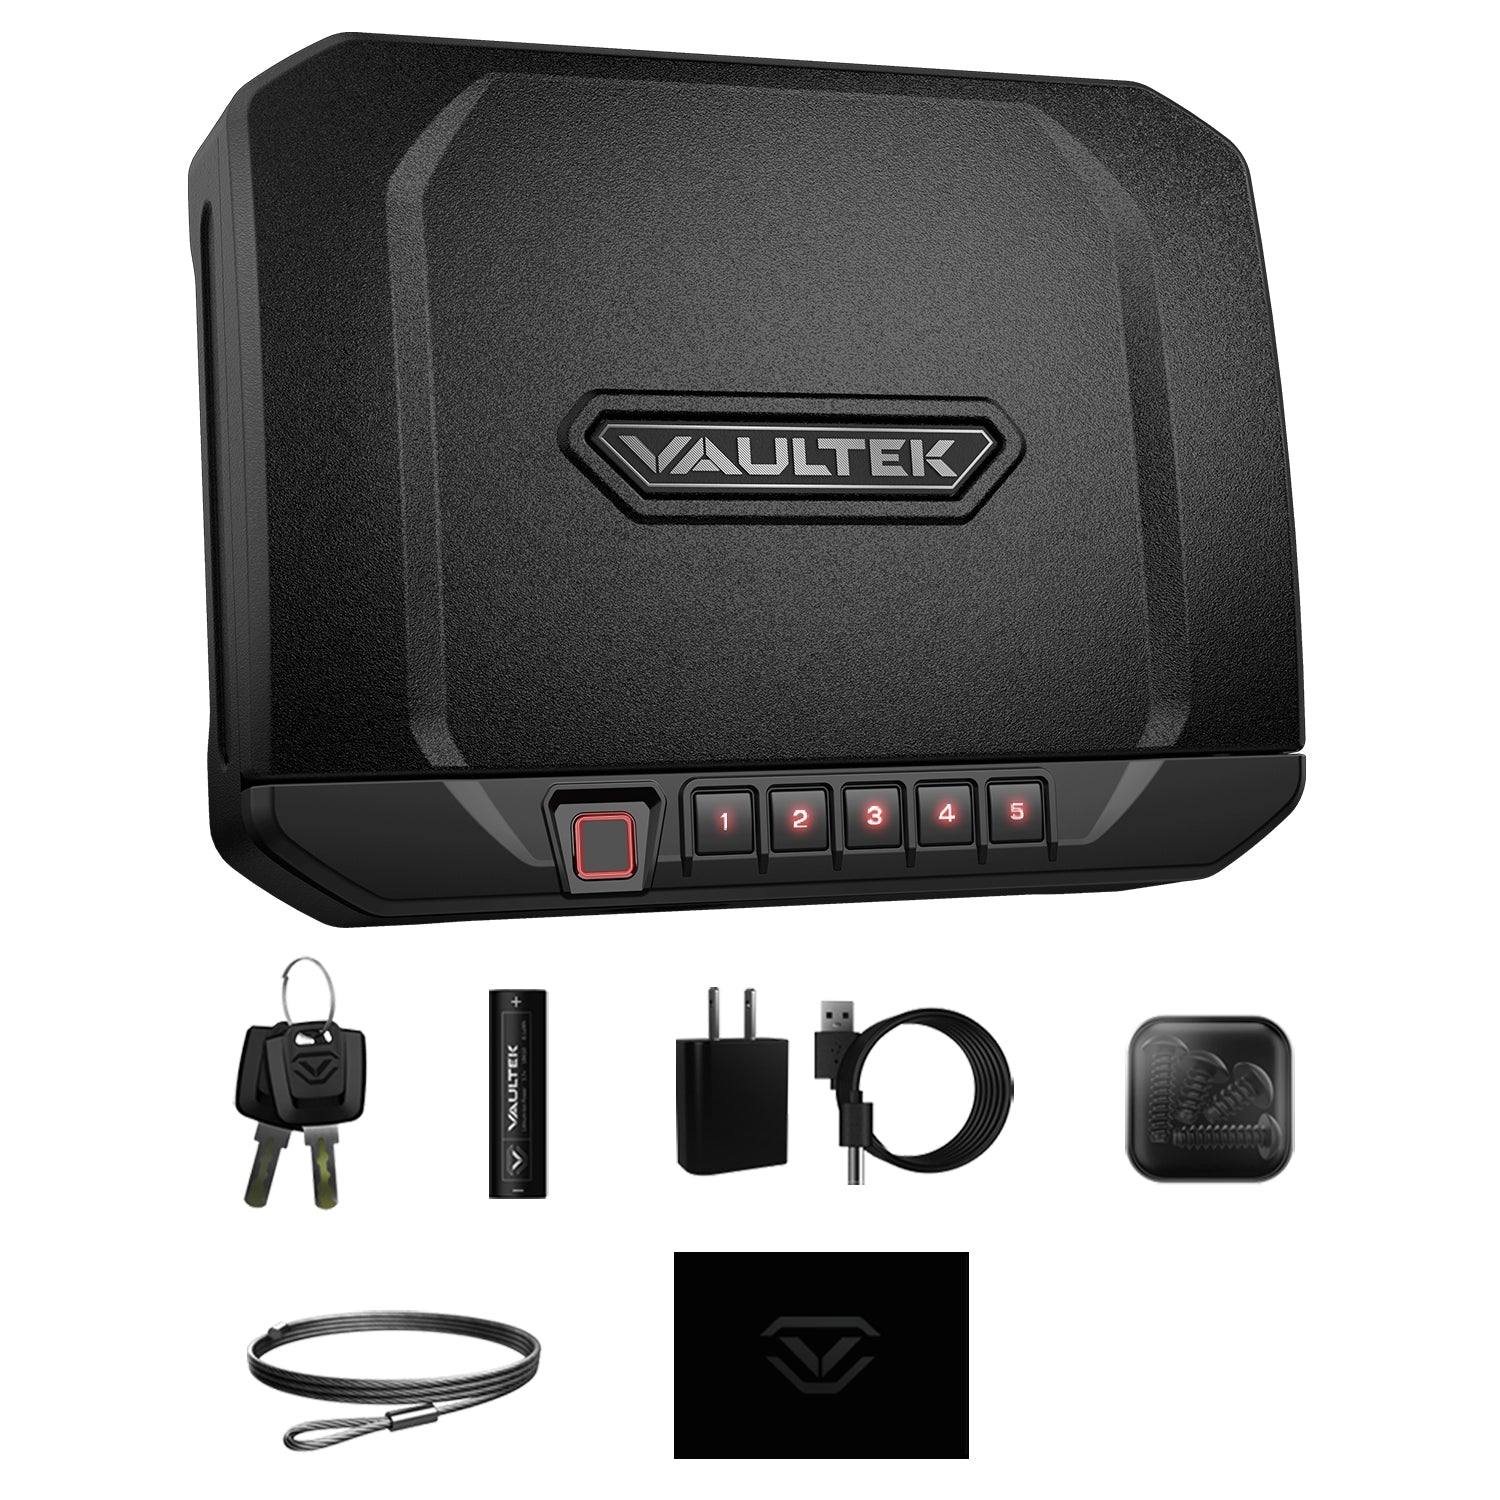 Vaultek VS10i Compact Biometric Bluetooth Smart Safe